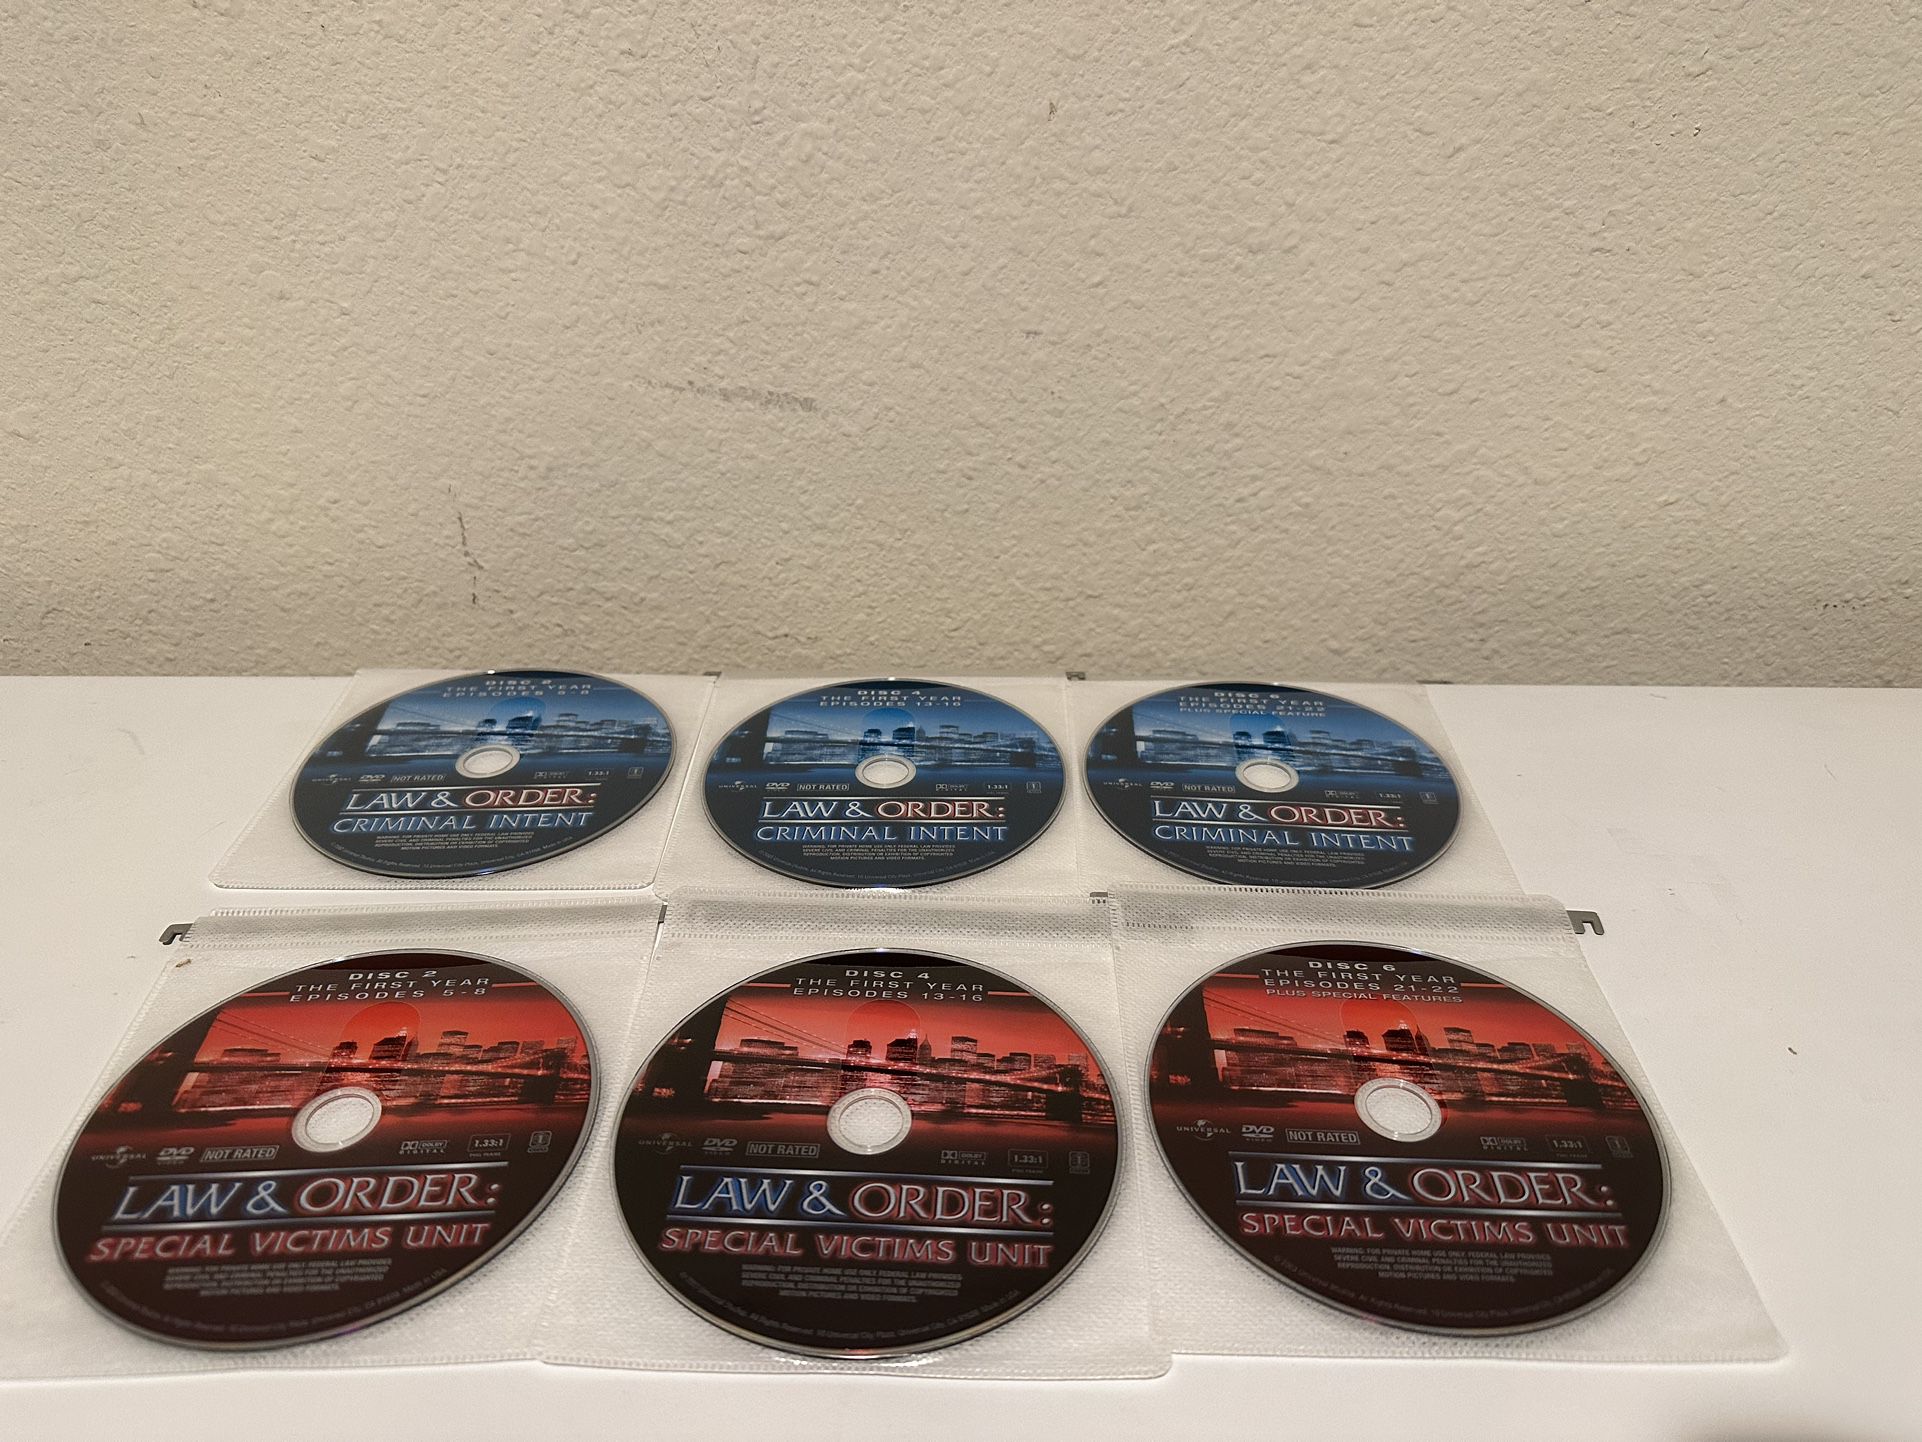 Law & Order: SVU Season 1 & Law & Order: Criminal Intent Season 1 (DVD)